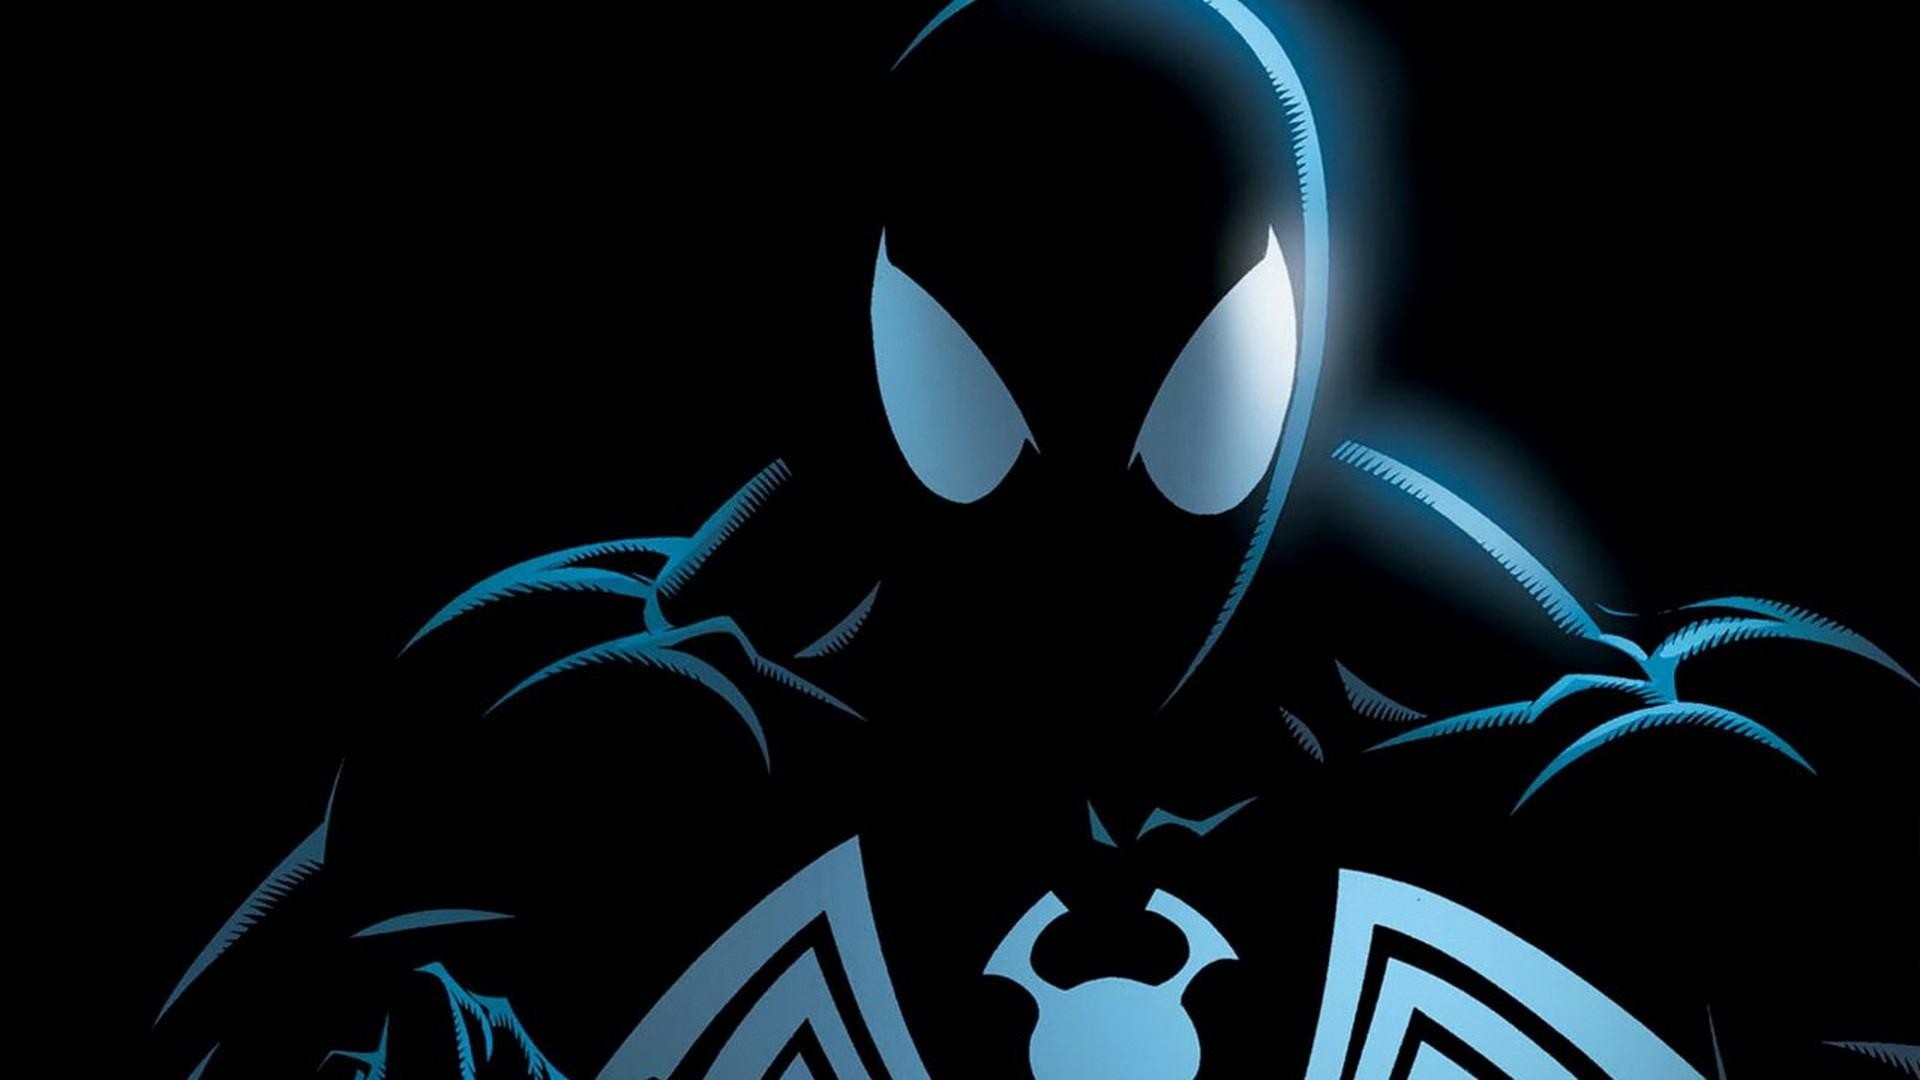 Spiderman comics spider man superhero backgrounds